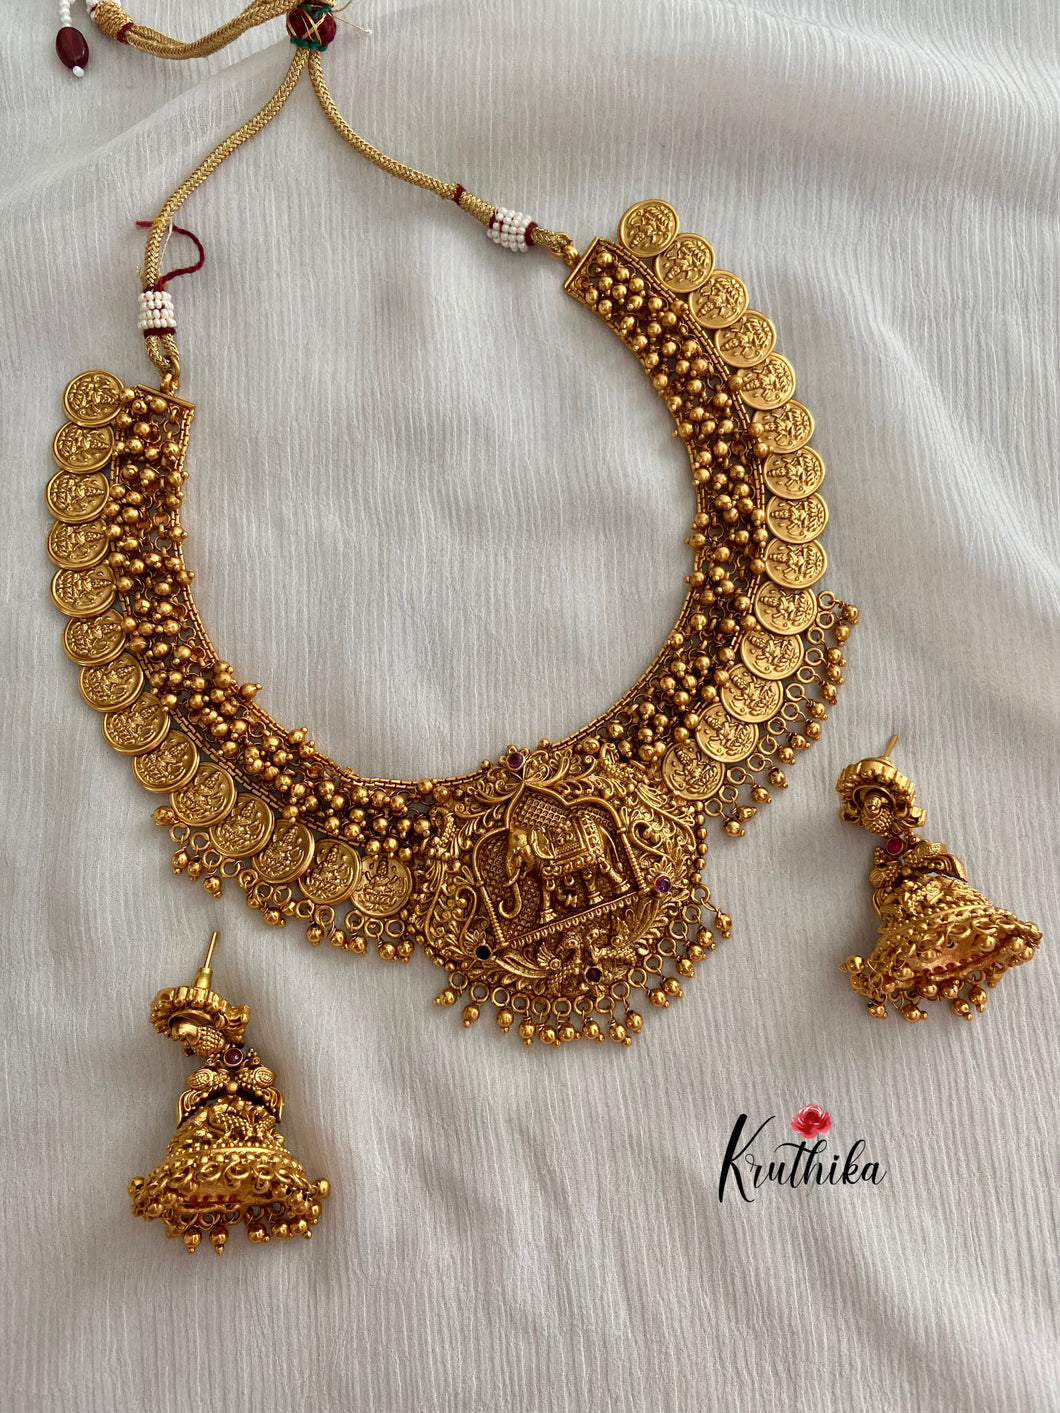 Kasu golden beads necklace with Elephant pendant NC453